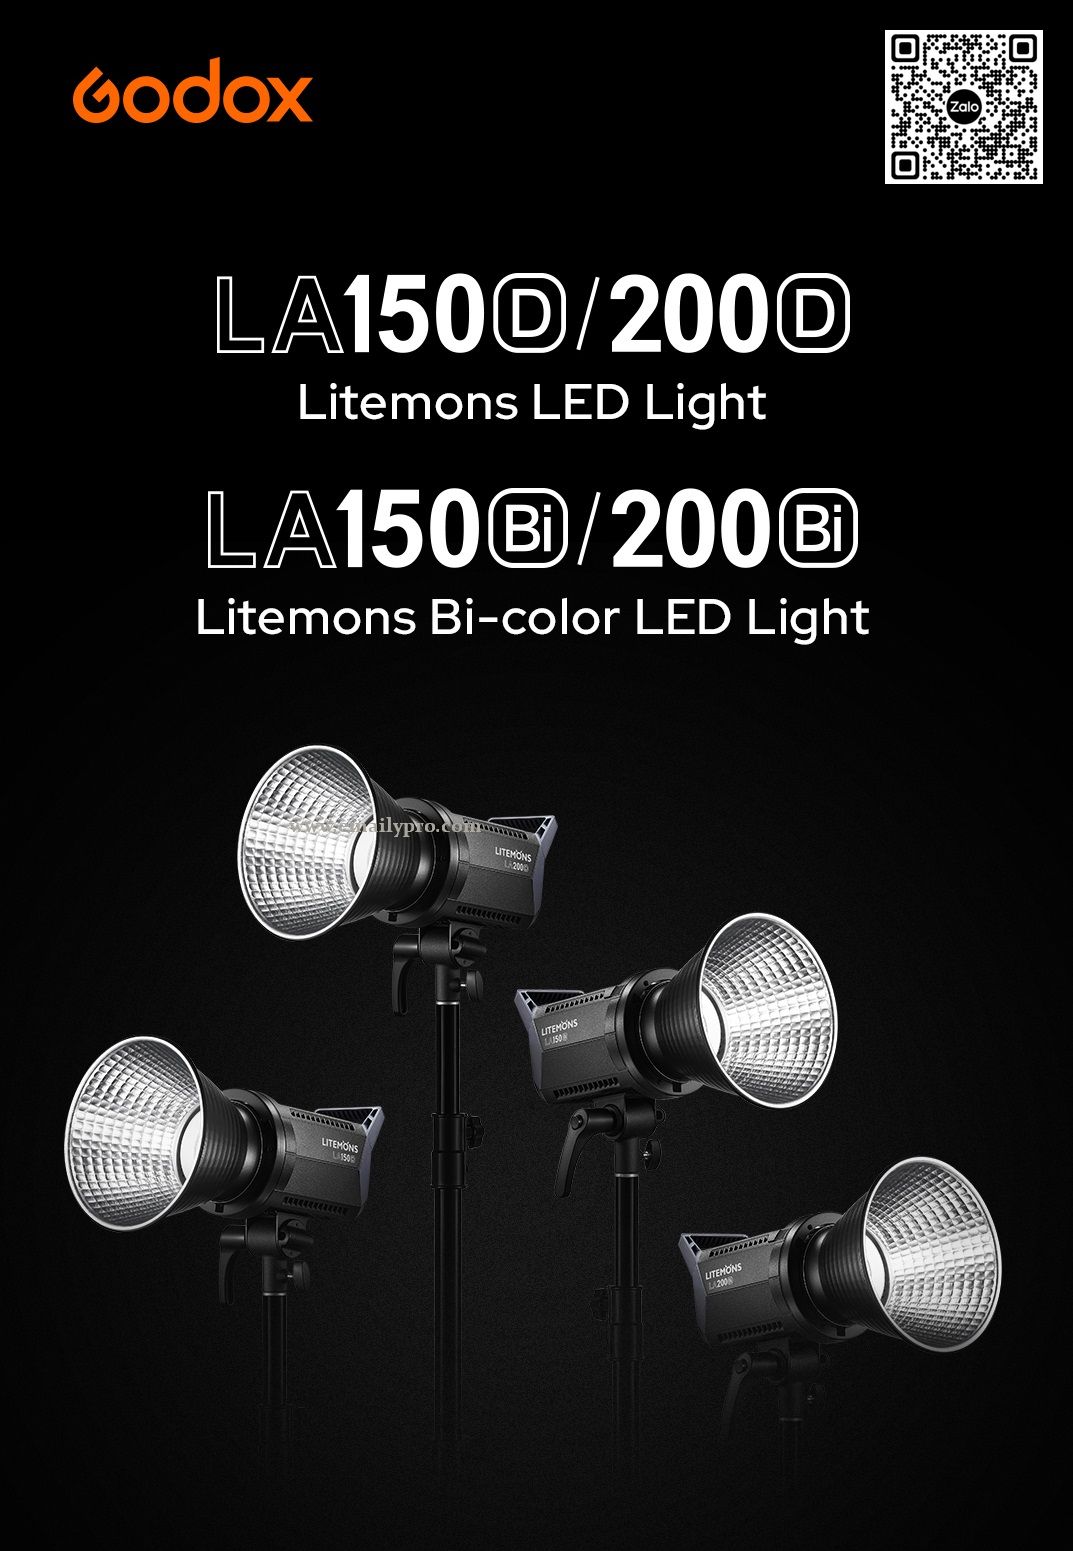  GODOX LITEMONS LA-200Bi LED VIDEO LIGHT 